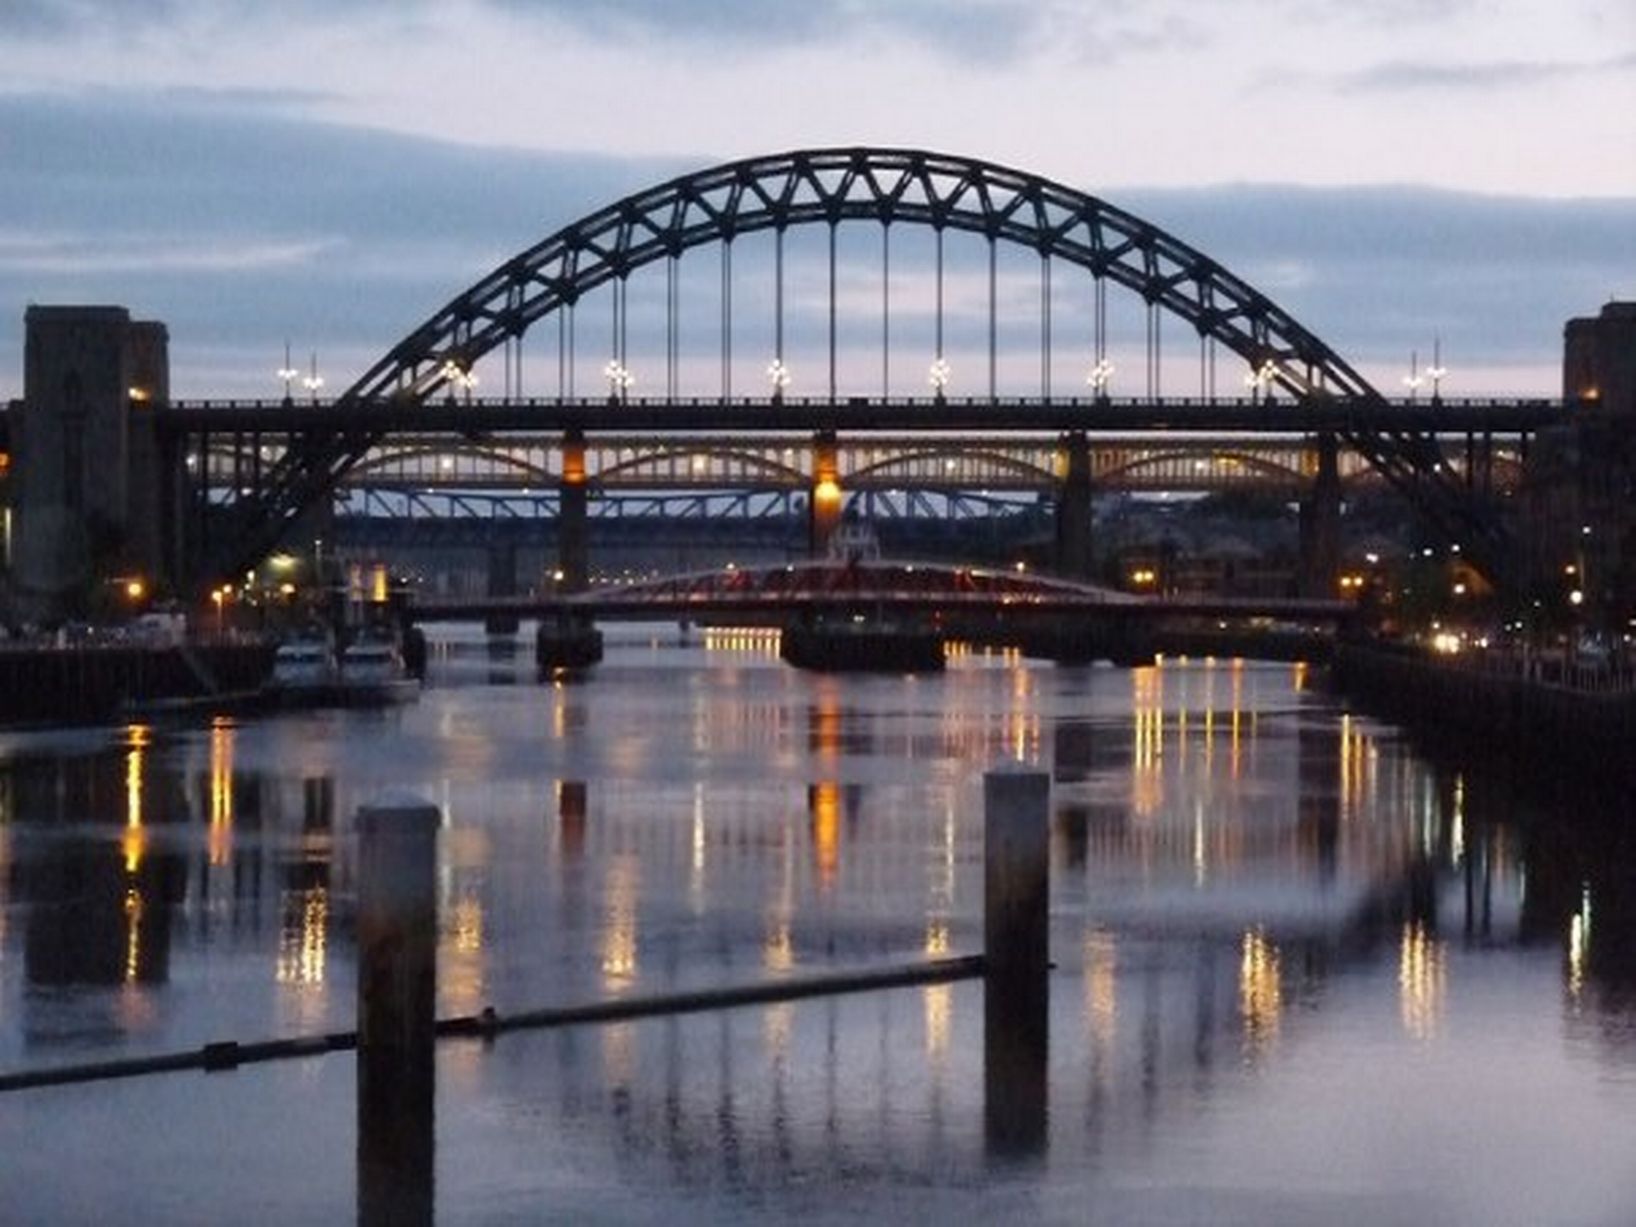 40 fabulous images of Newcastle's Tyne Bridge celebrate 90 years ...